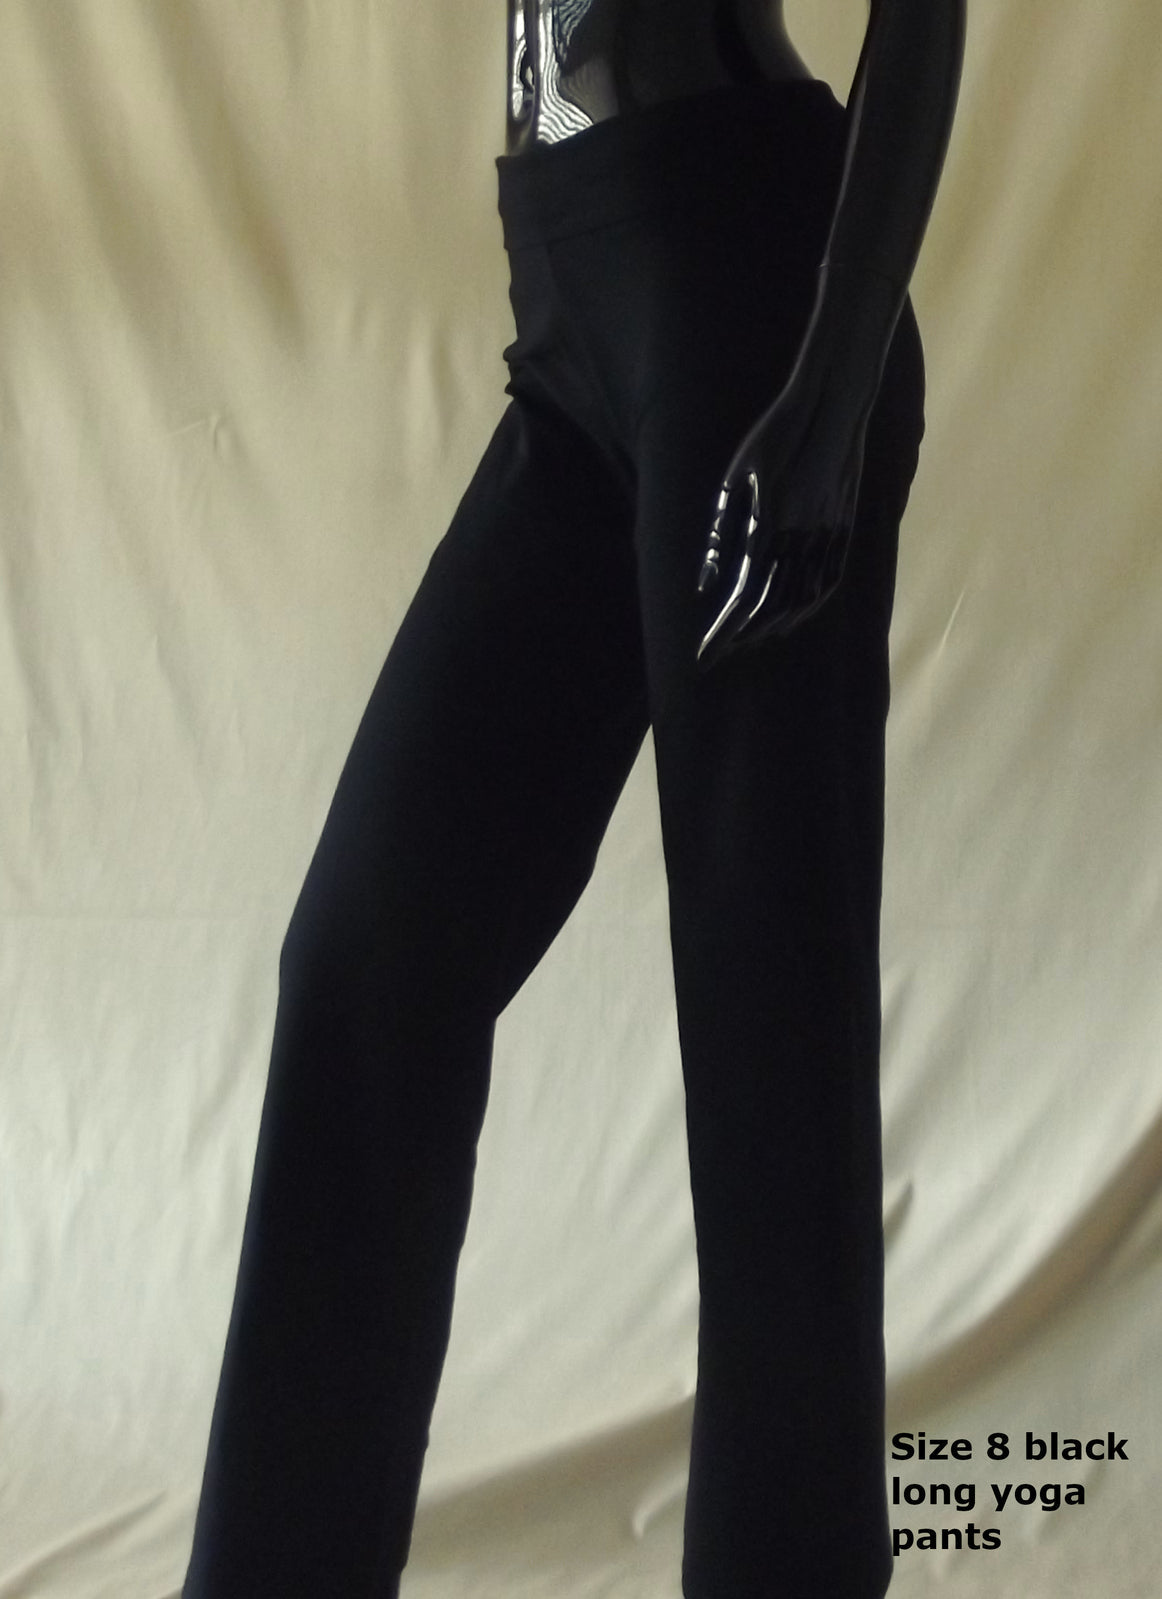 Australian made women's black long yoga pants